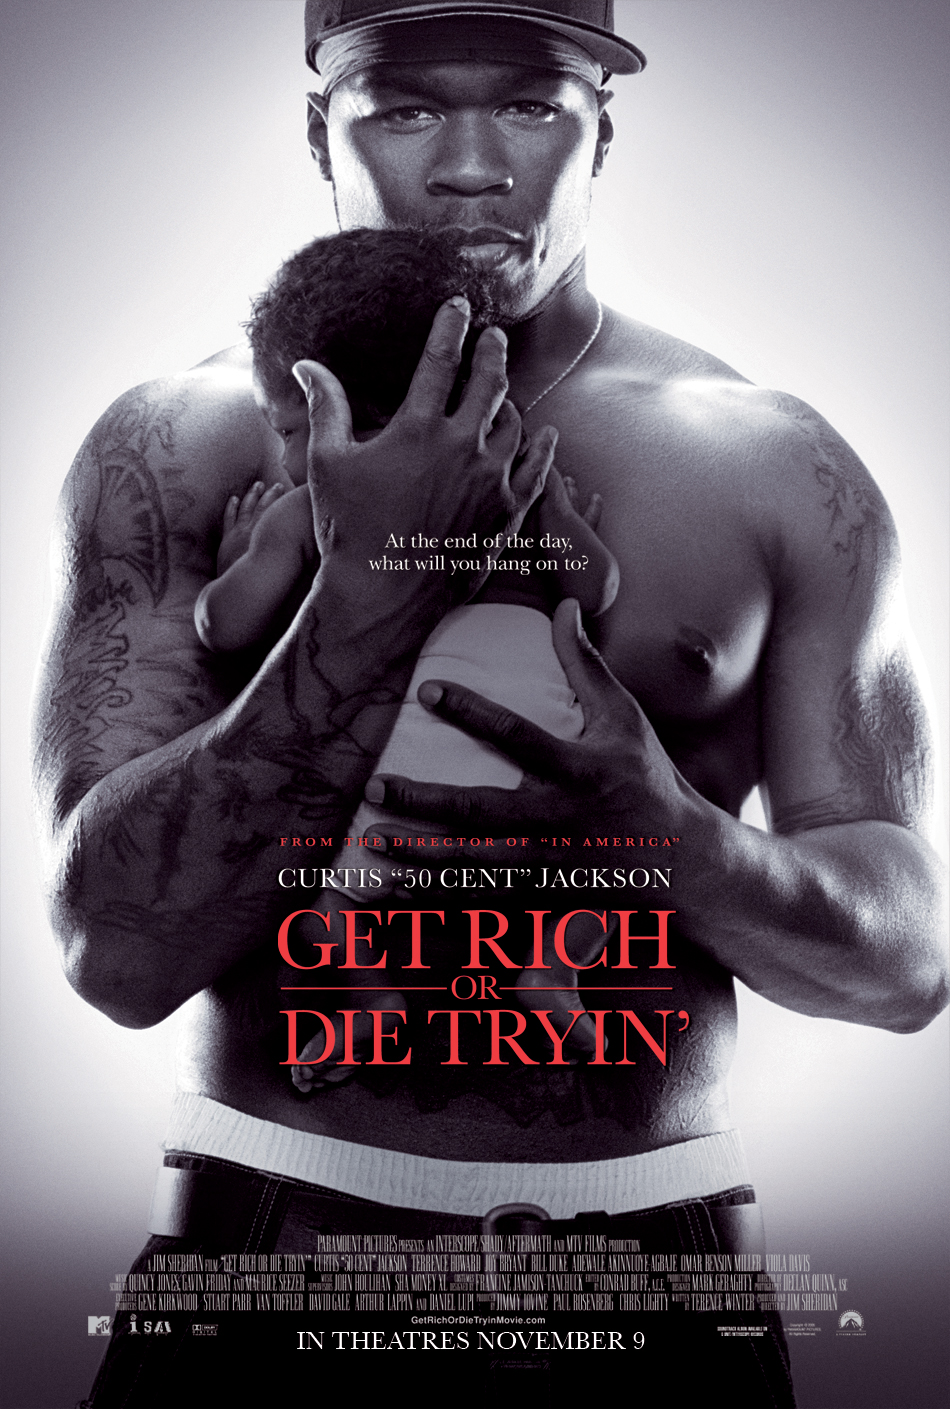 Get Rich or Die Tryin poster-ის სურათის შედეგი